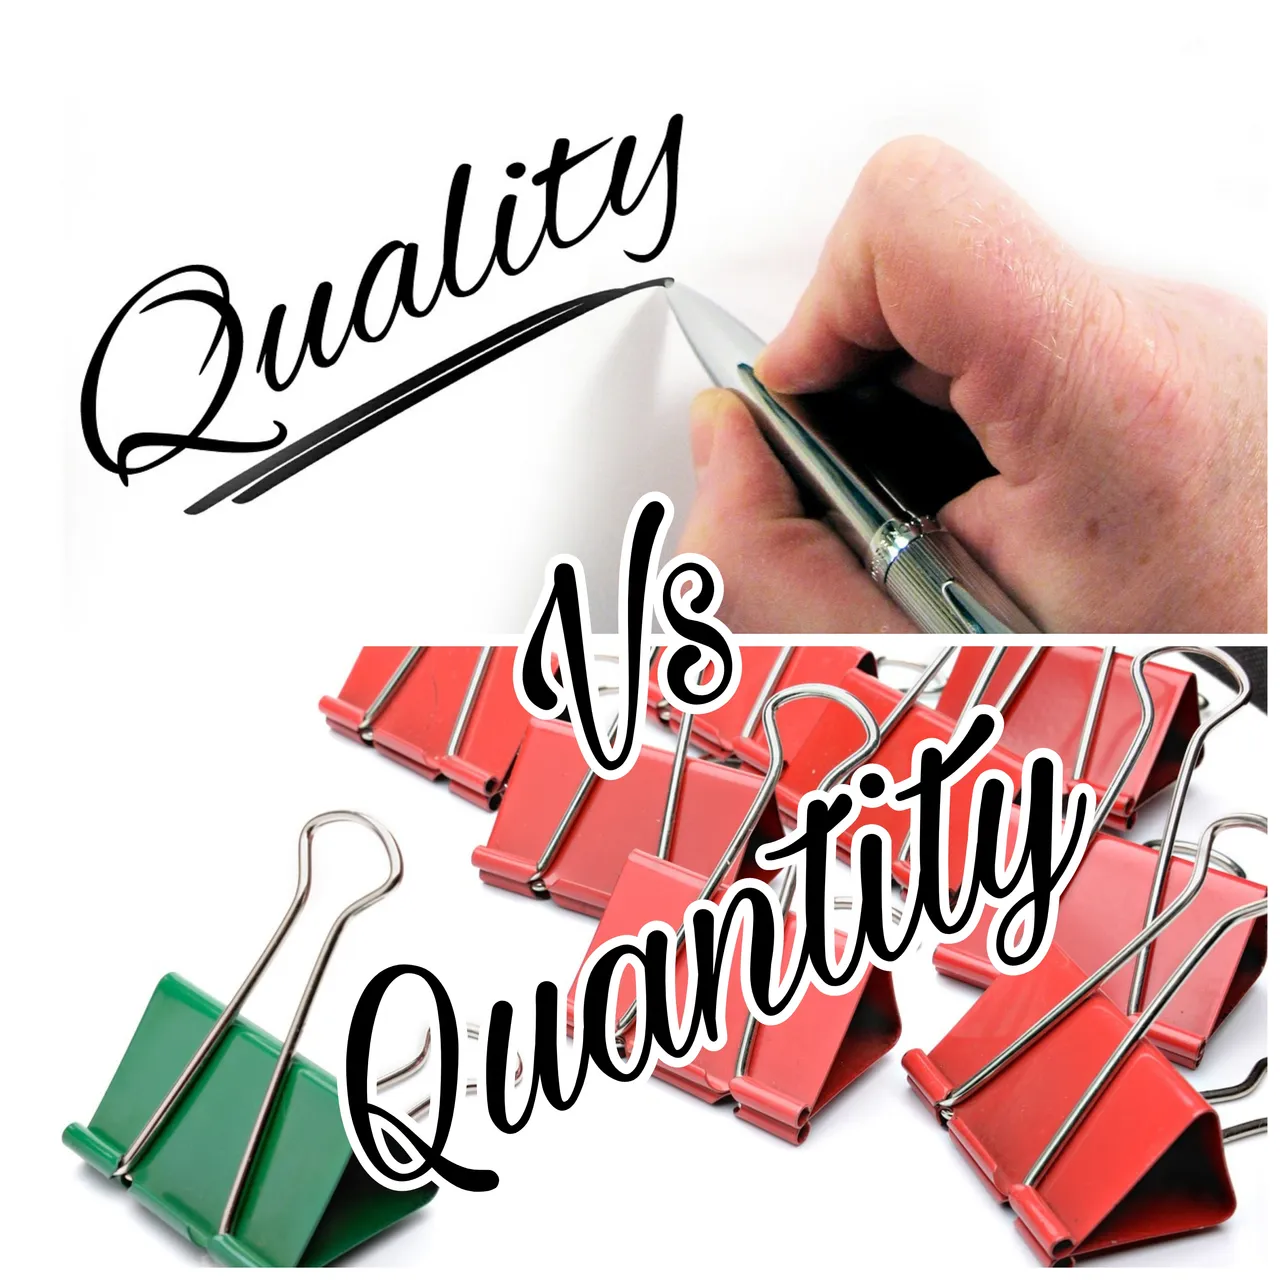 quality_vs_quantity.jpg